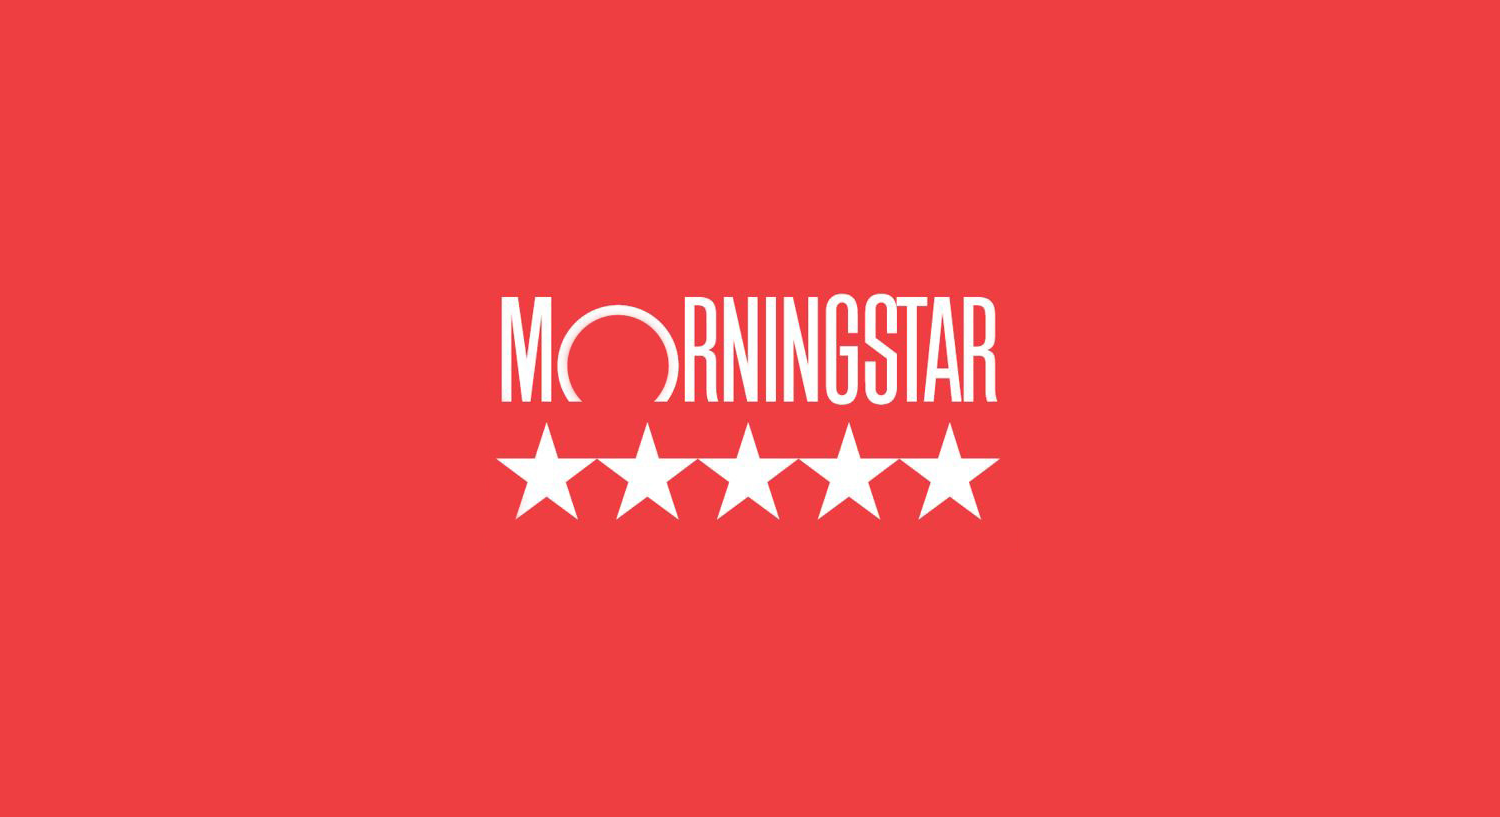 Morningstar-Recognition-2.png